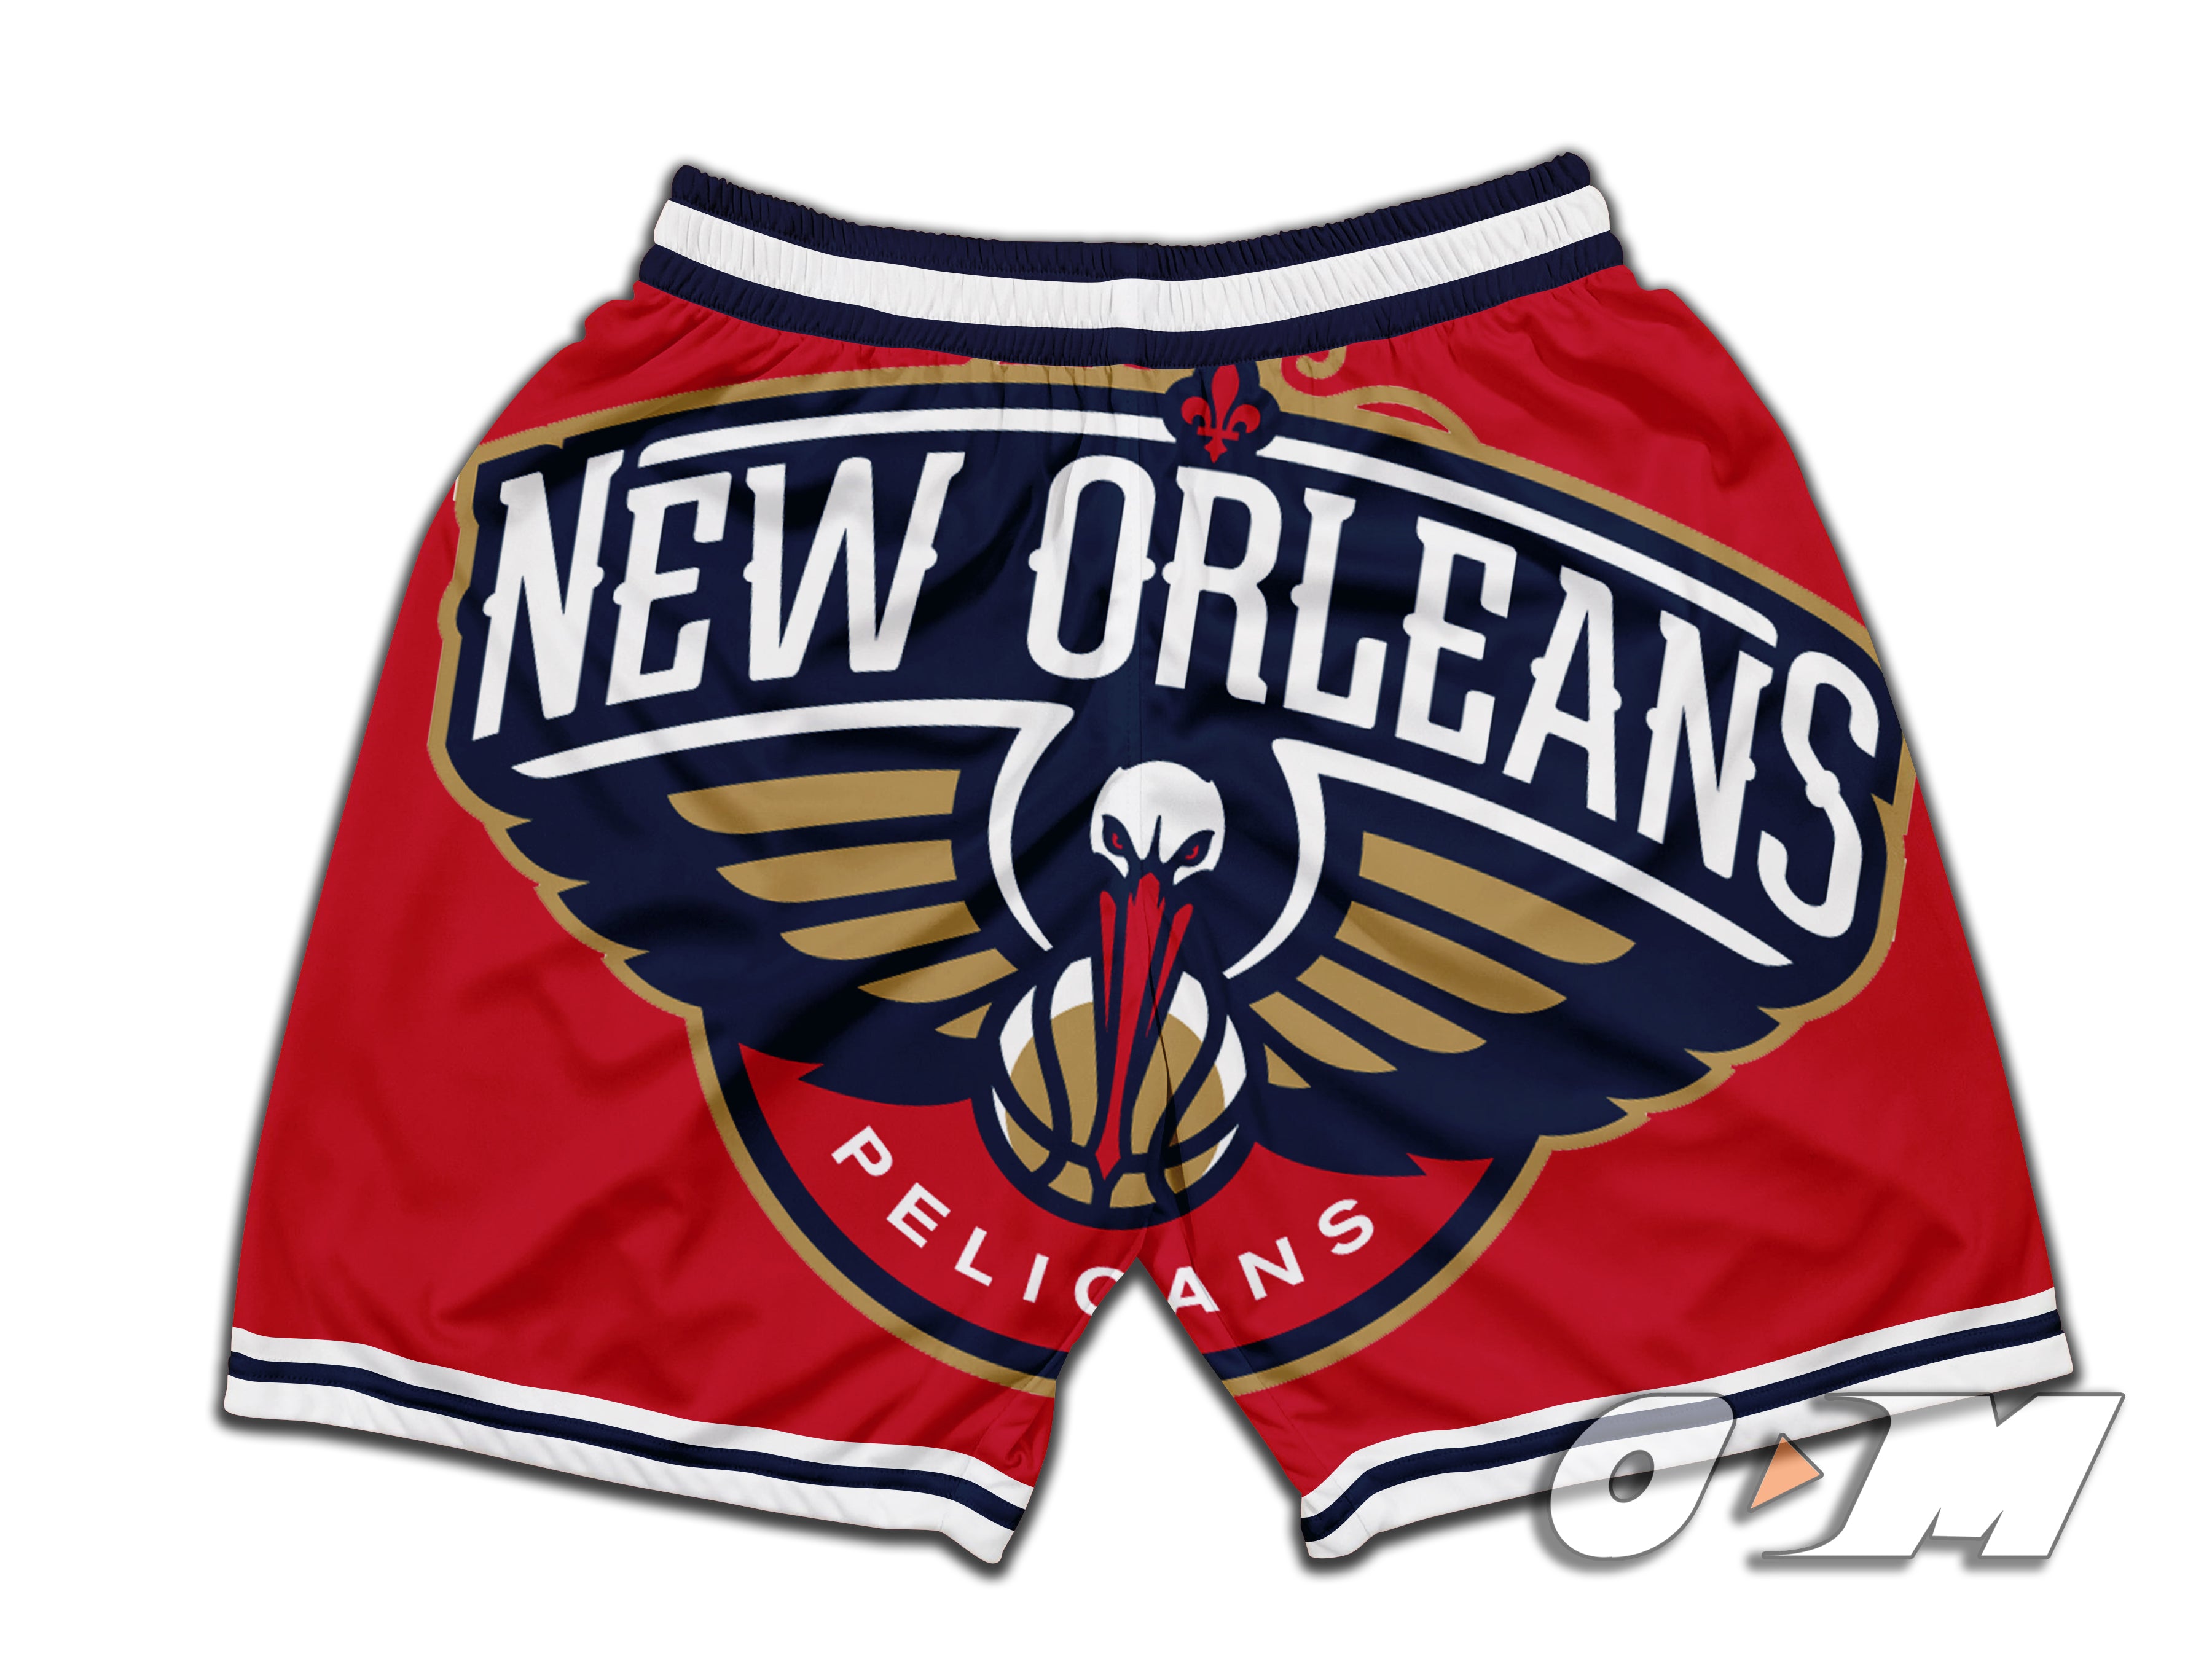 New Orleans Pelicans Retro Shorts